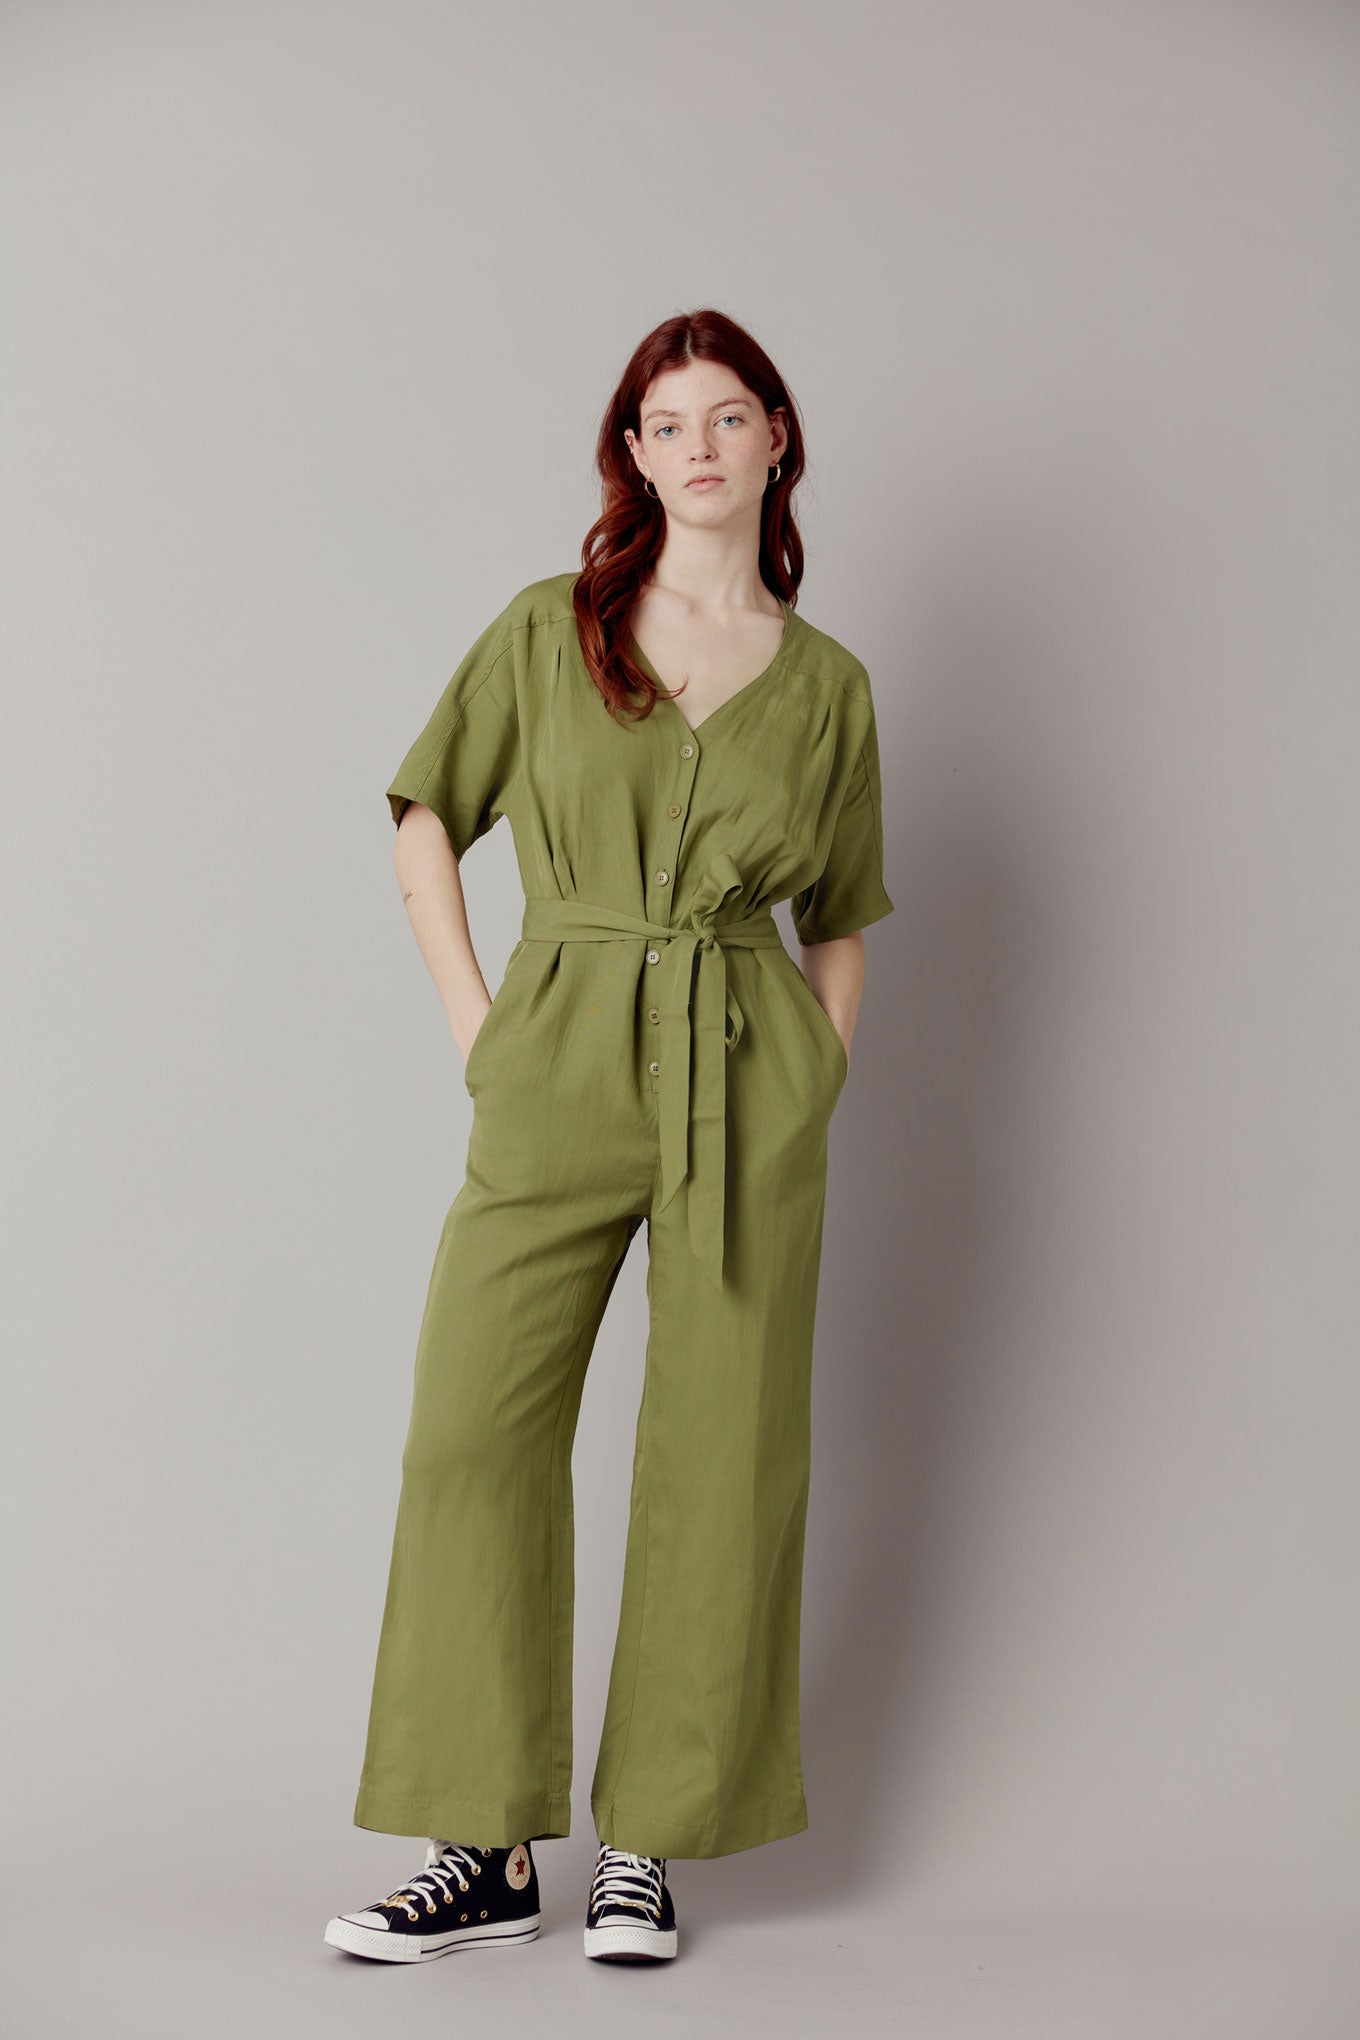 ASTIR - Tencel Linen Jumpsuit Khaki Green, SIZE 3 / UK 12 / EUR 40